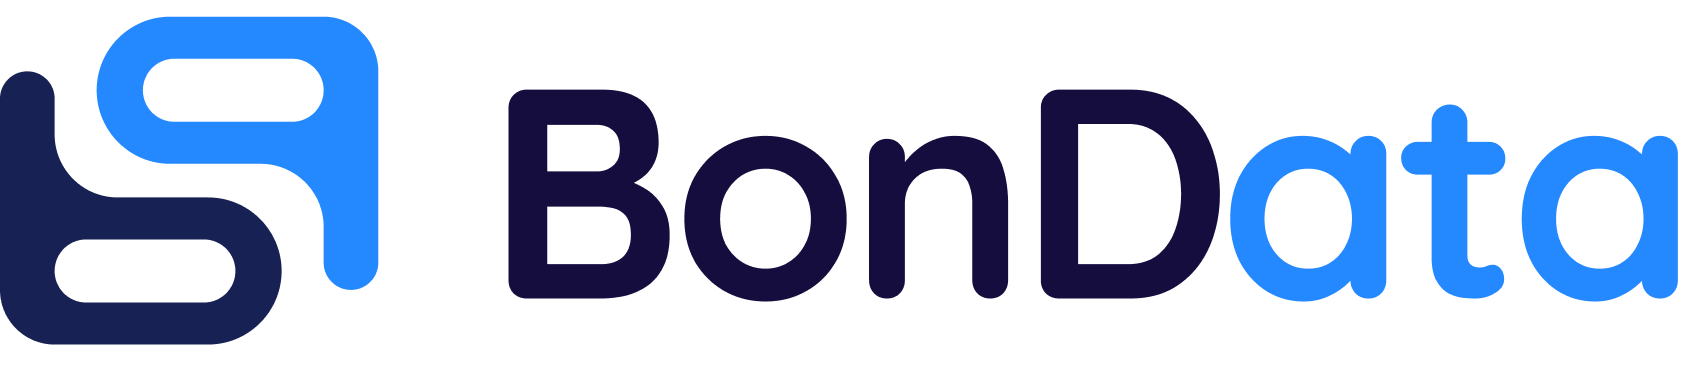 Bondata logo